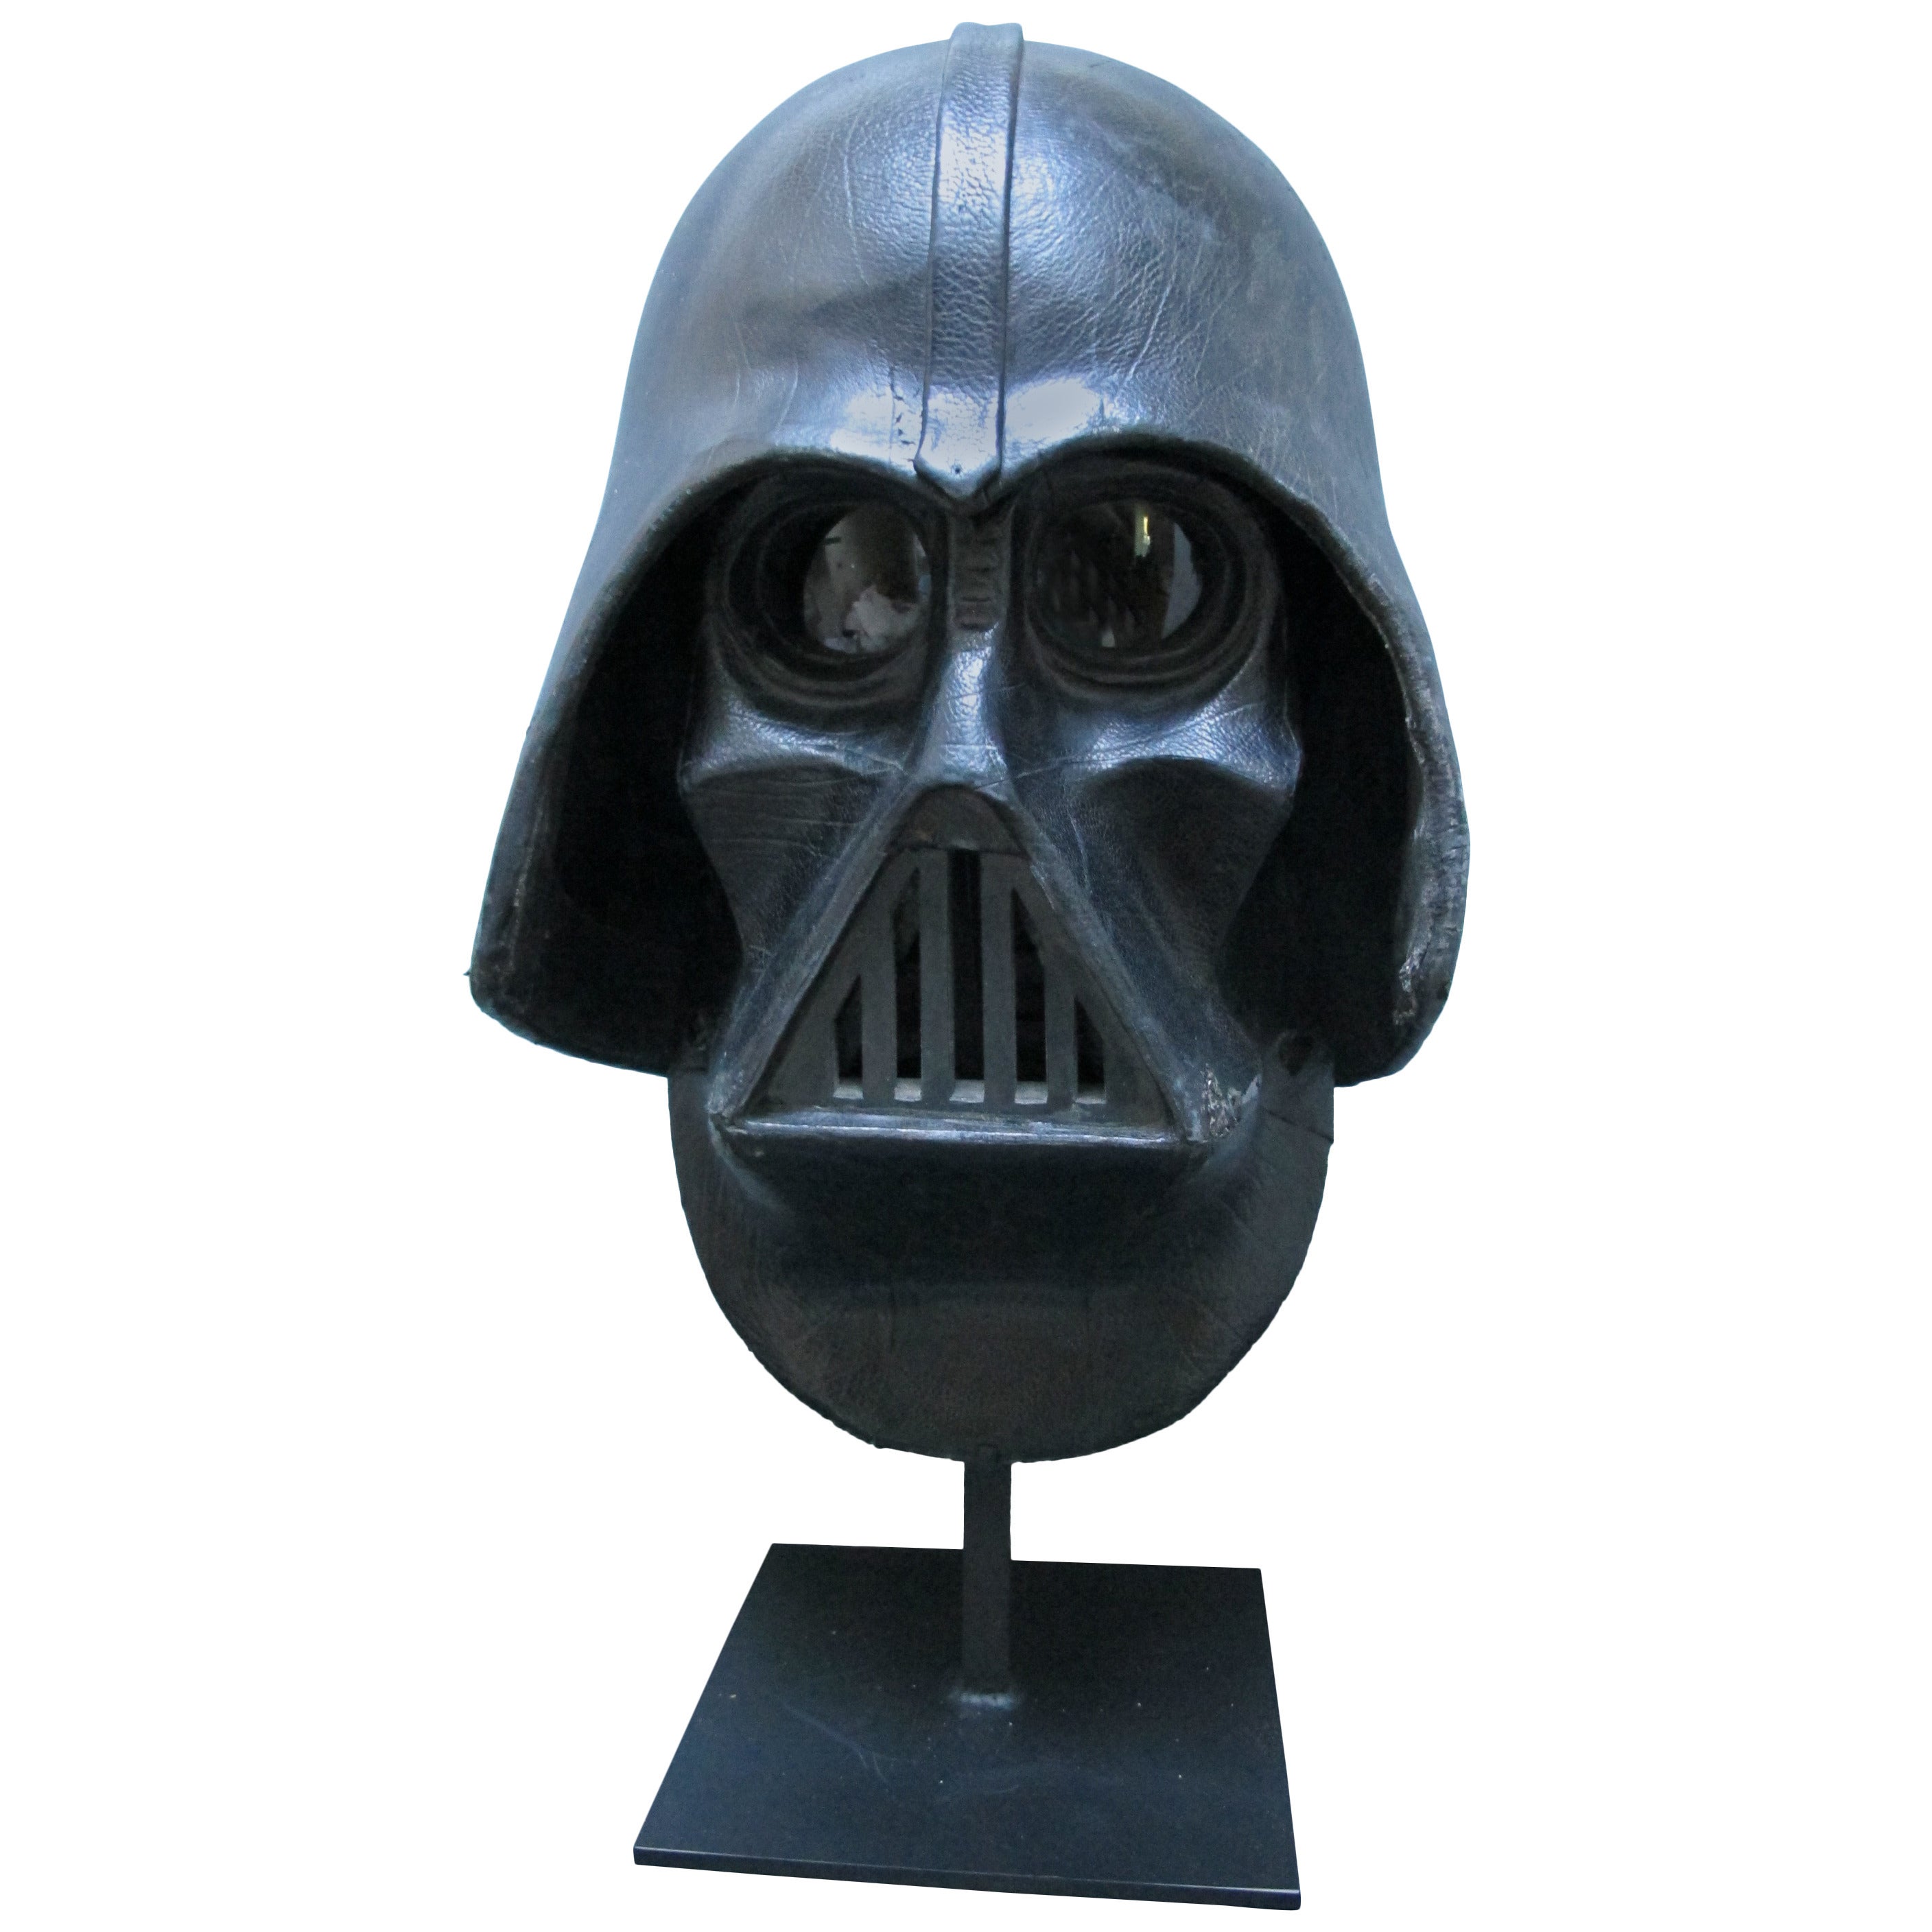 Star Wars Darth Vader Mask and Helmet